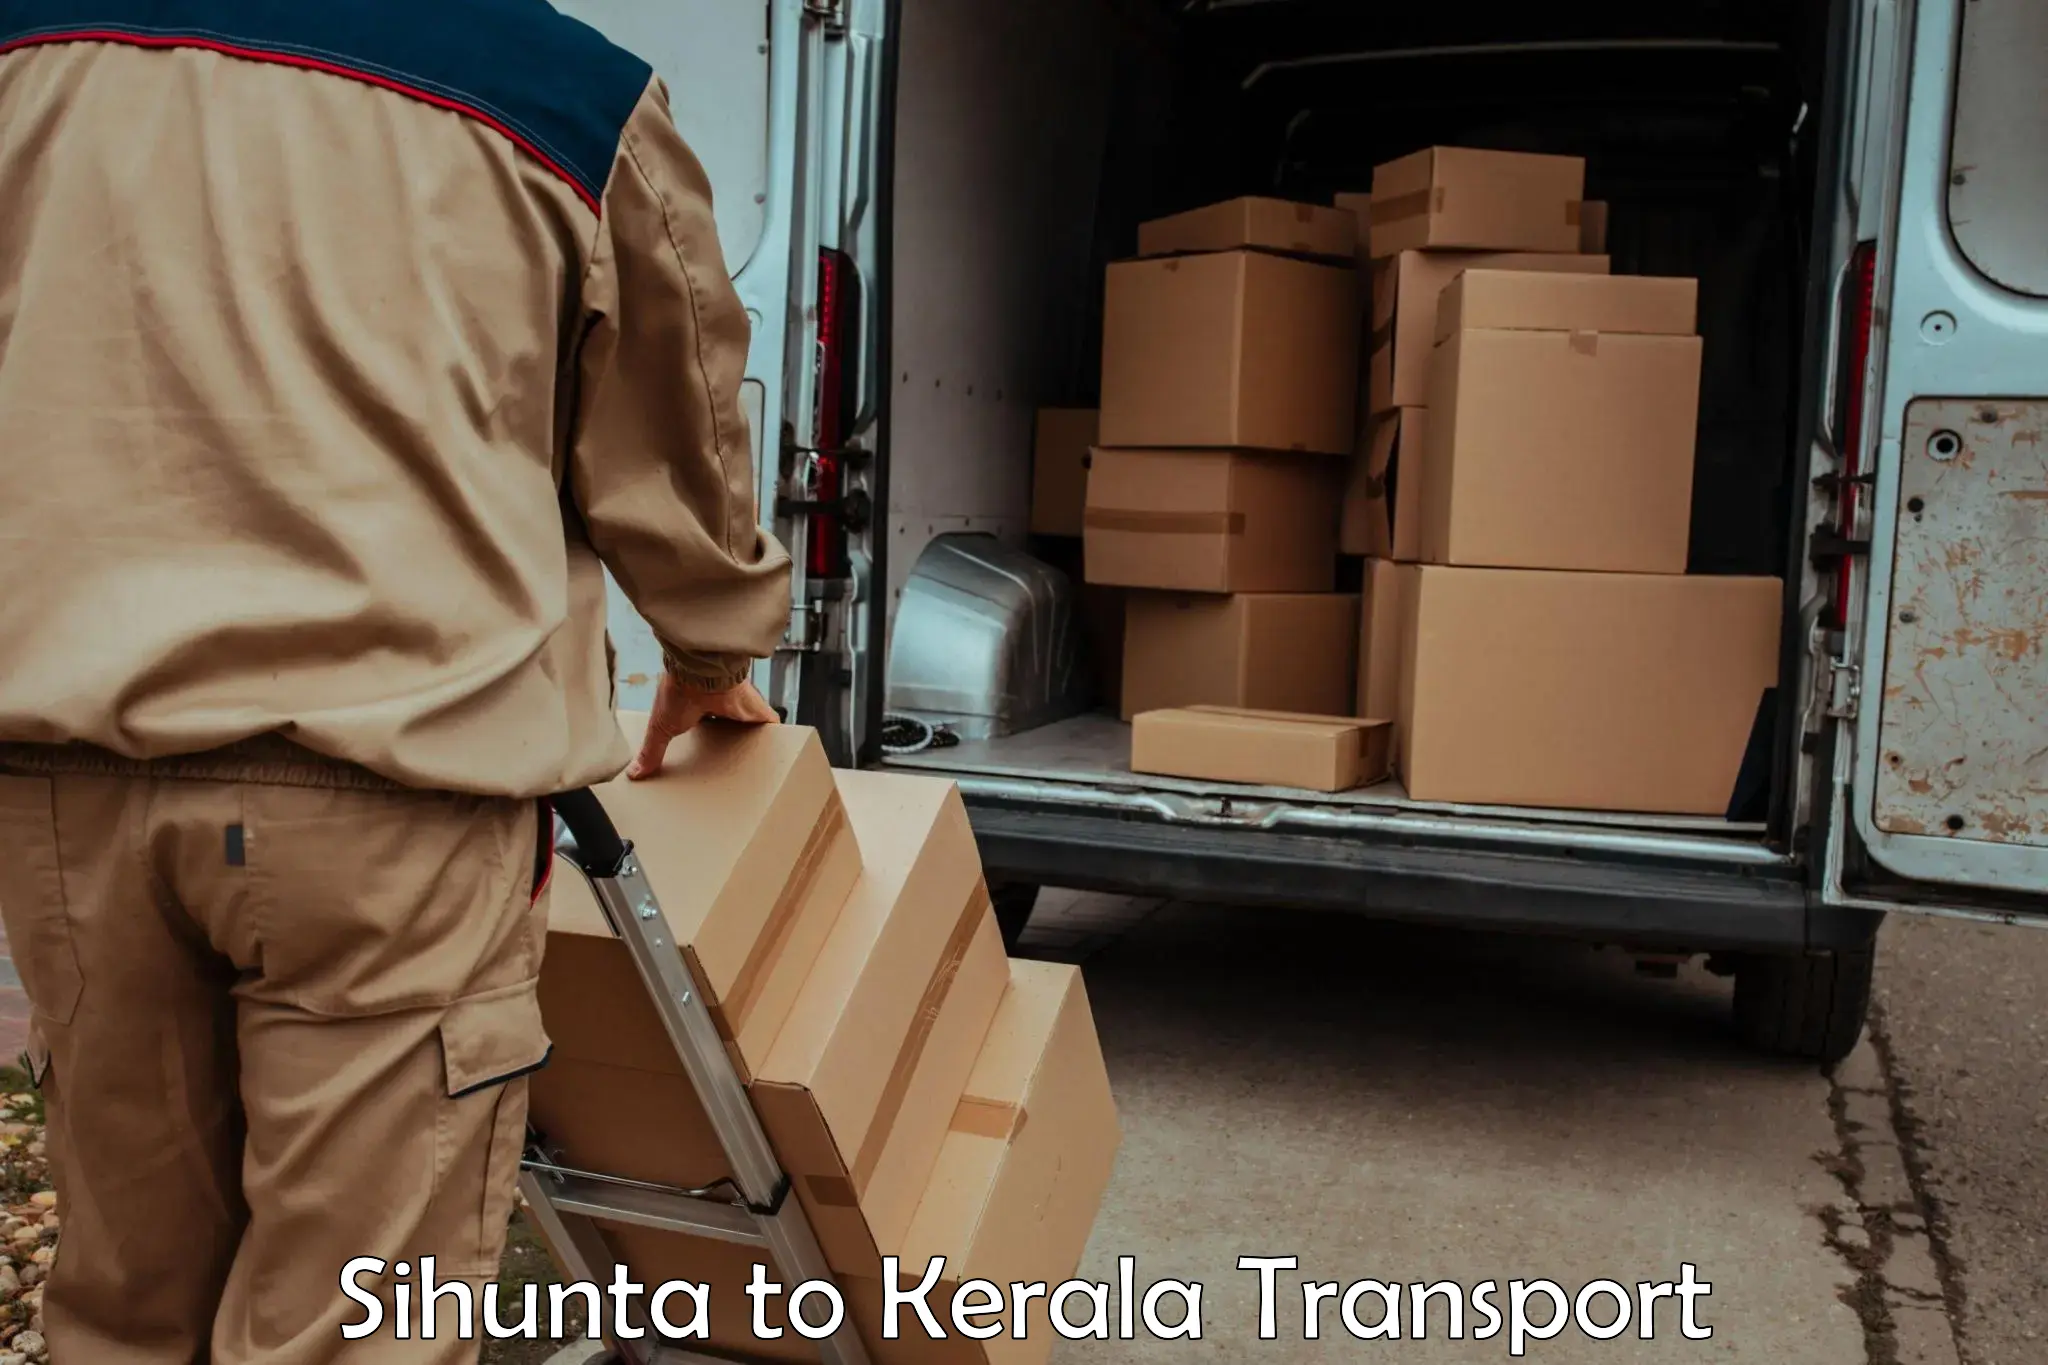 Cycle transportation service Sihunta to Kerala